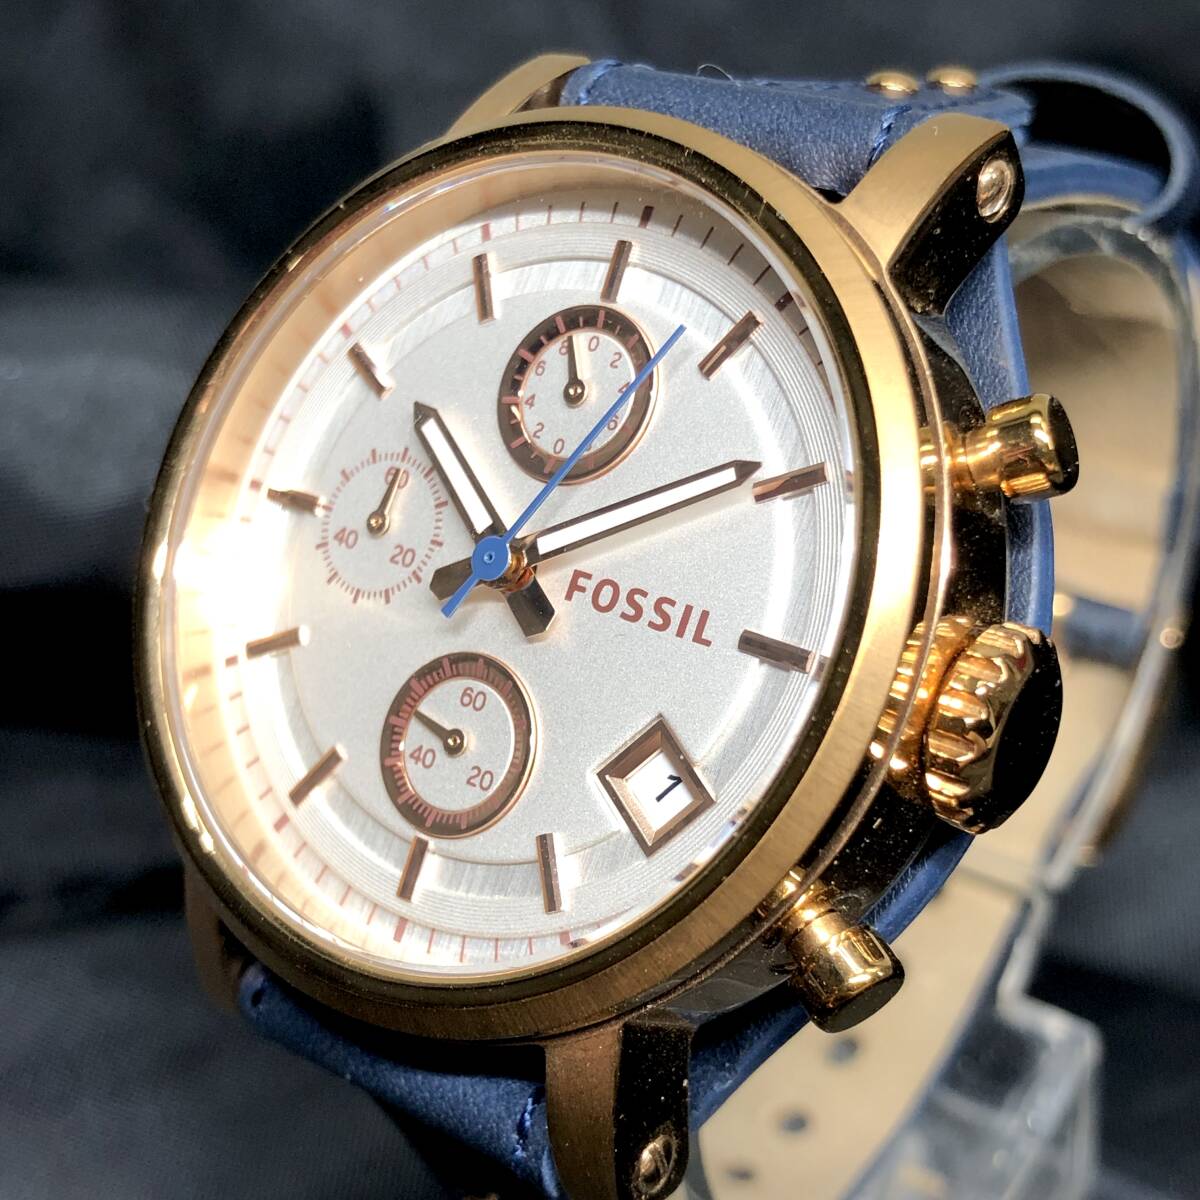 FOSSIL Fossil оригинал The Boy Friend хронограф кожа часы голубой кварц наручные часы Date 3 стрелки 24d.MZ